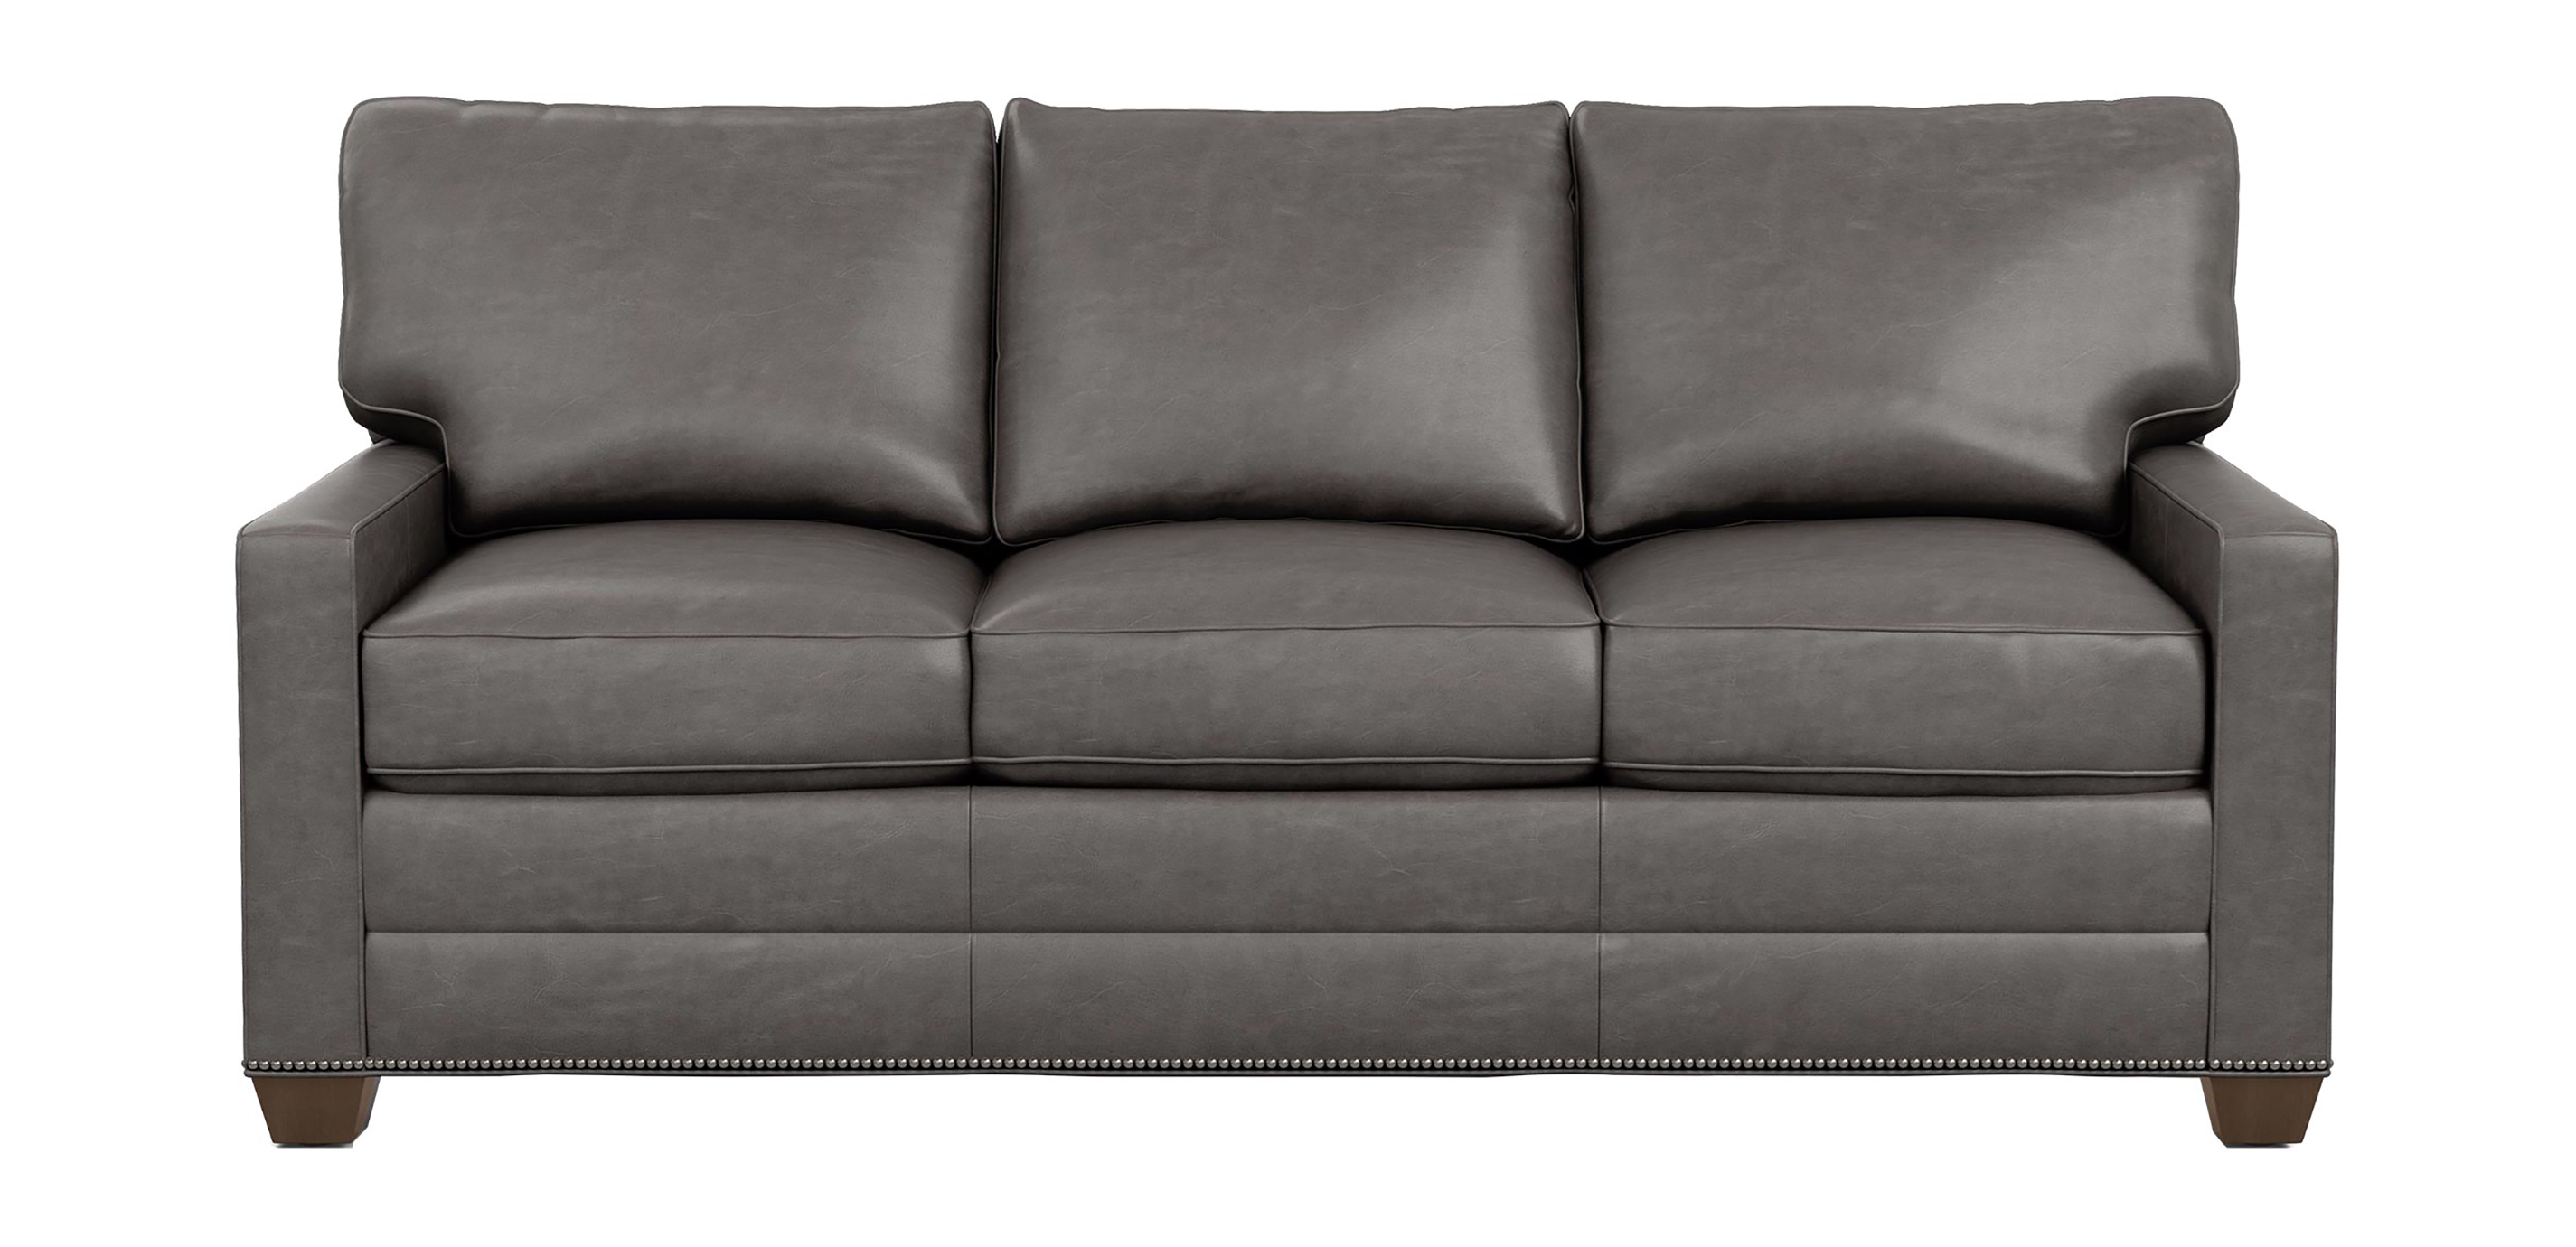 track arm leather sleeper sofa